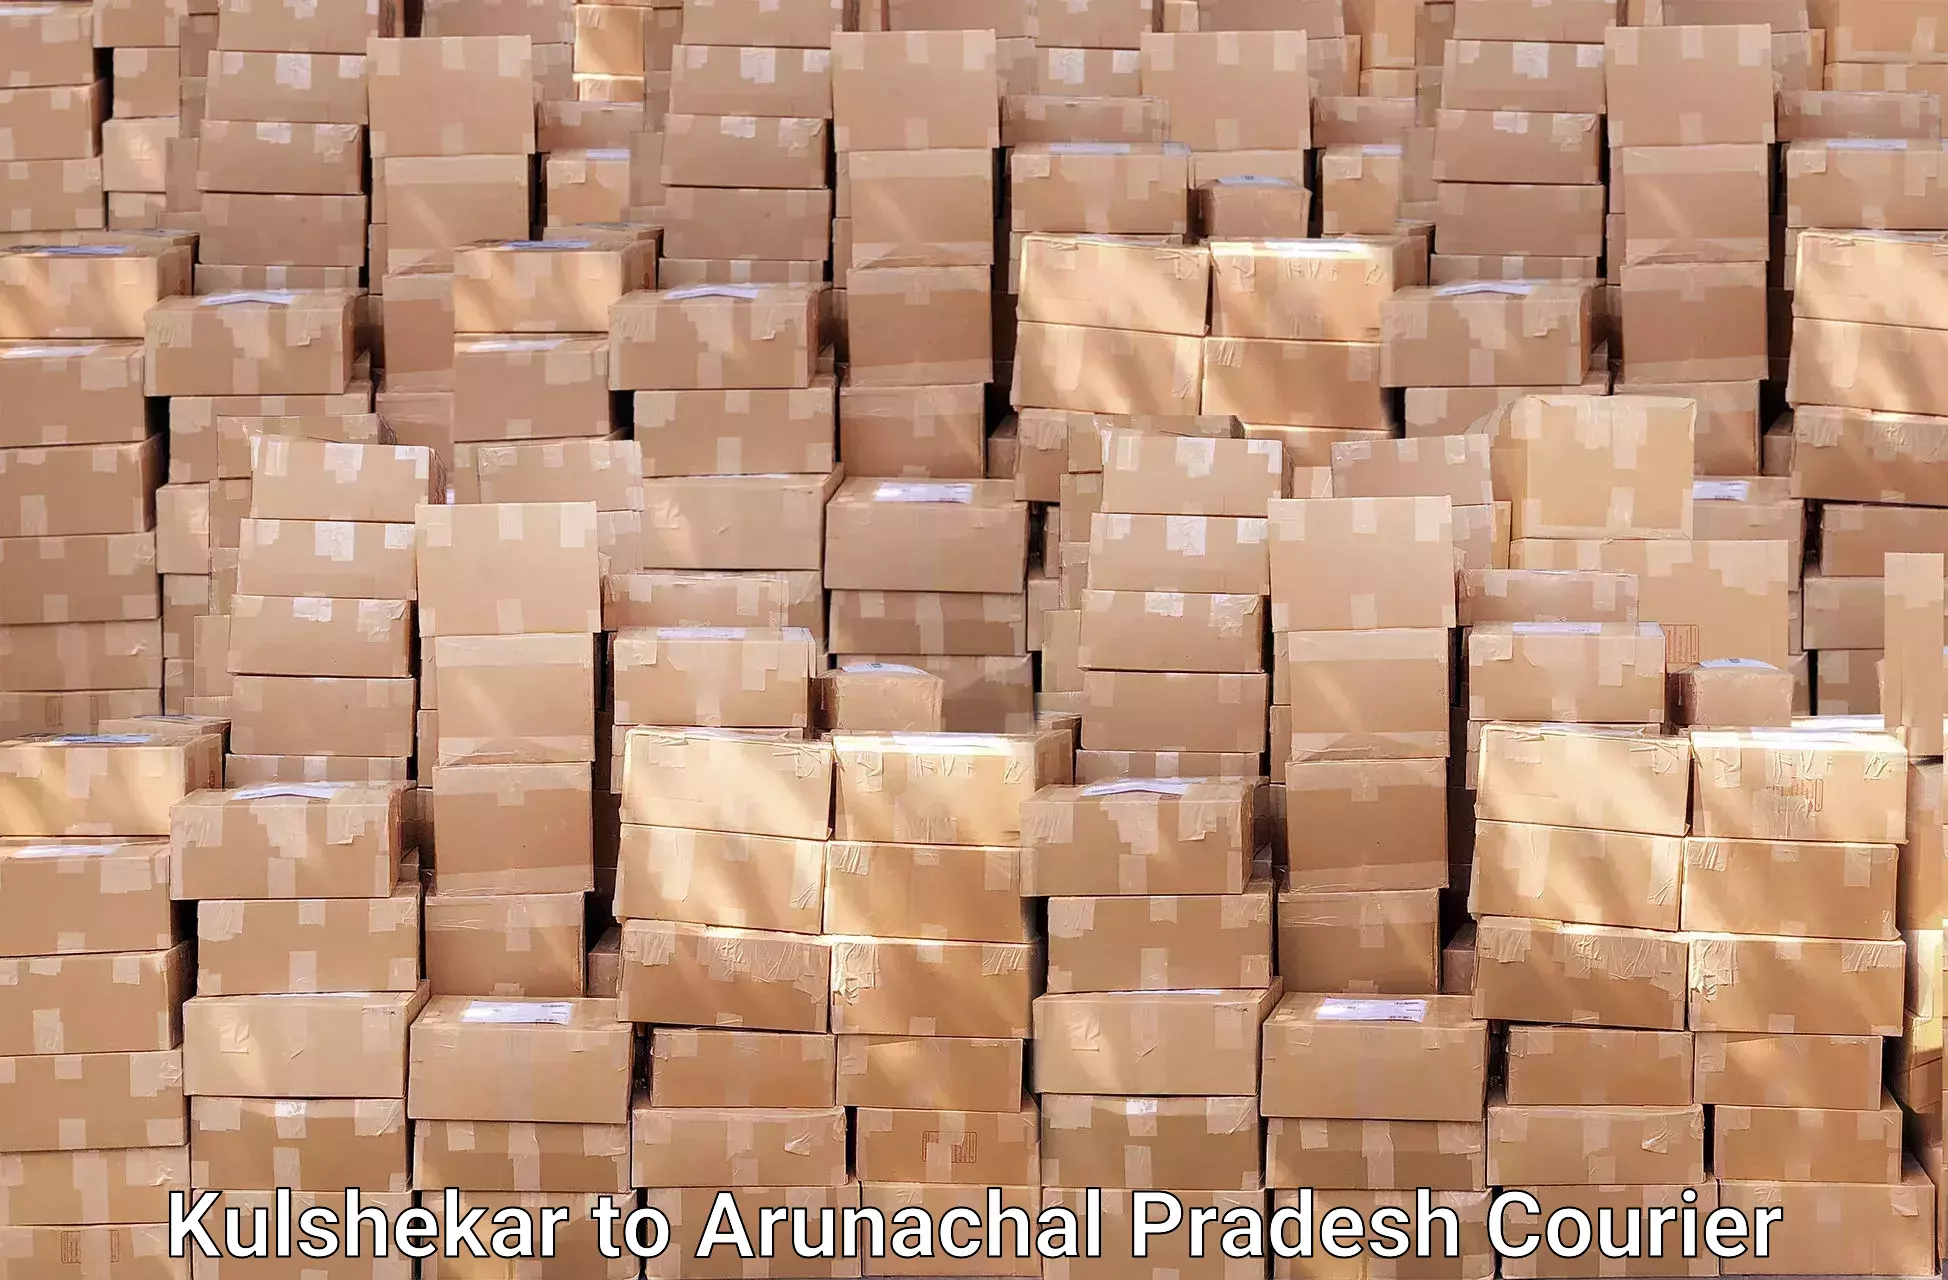 Professional moving company Kulshekar to Arunachal Pradesh